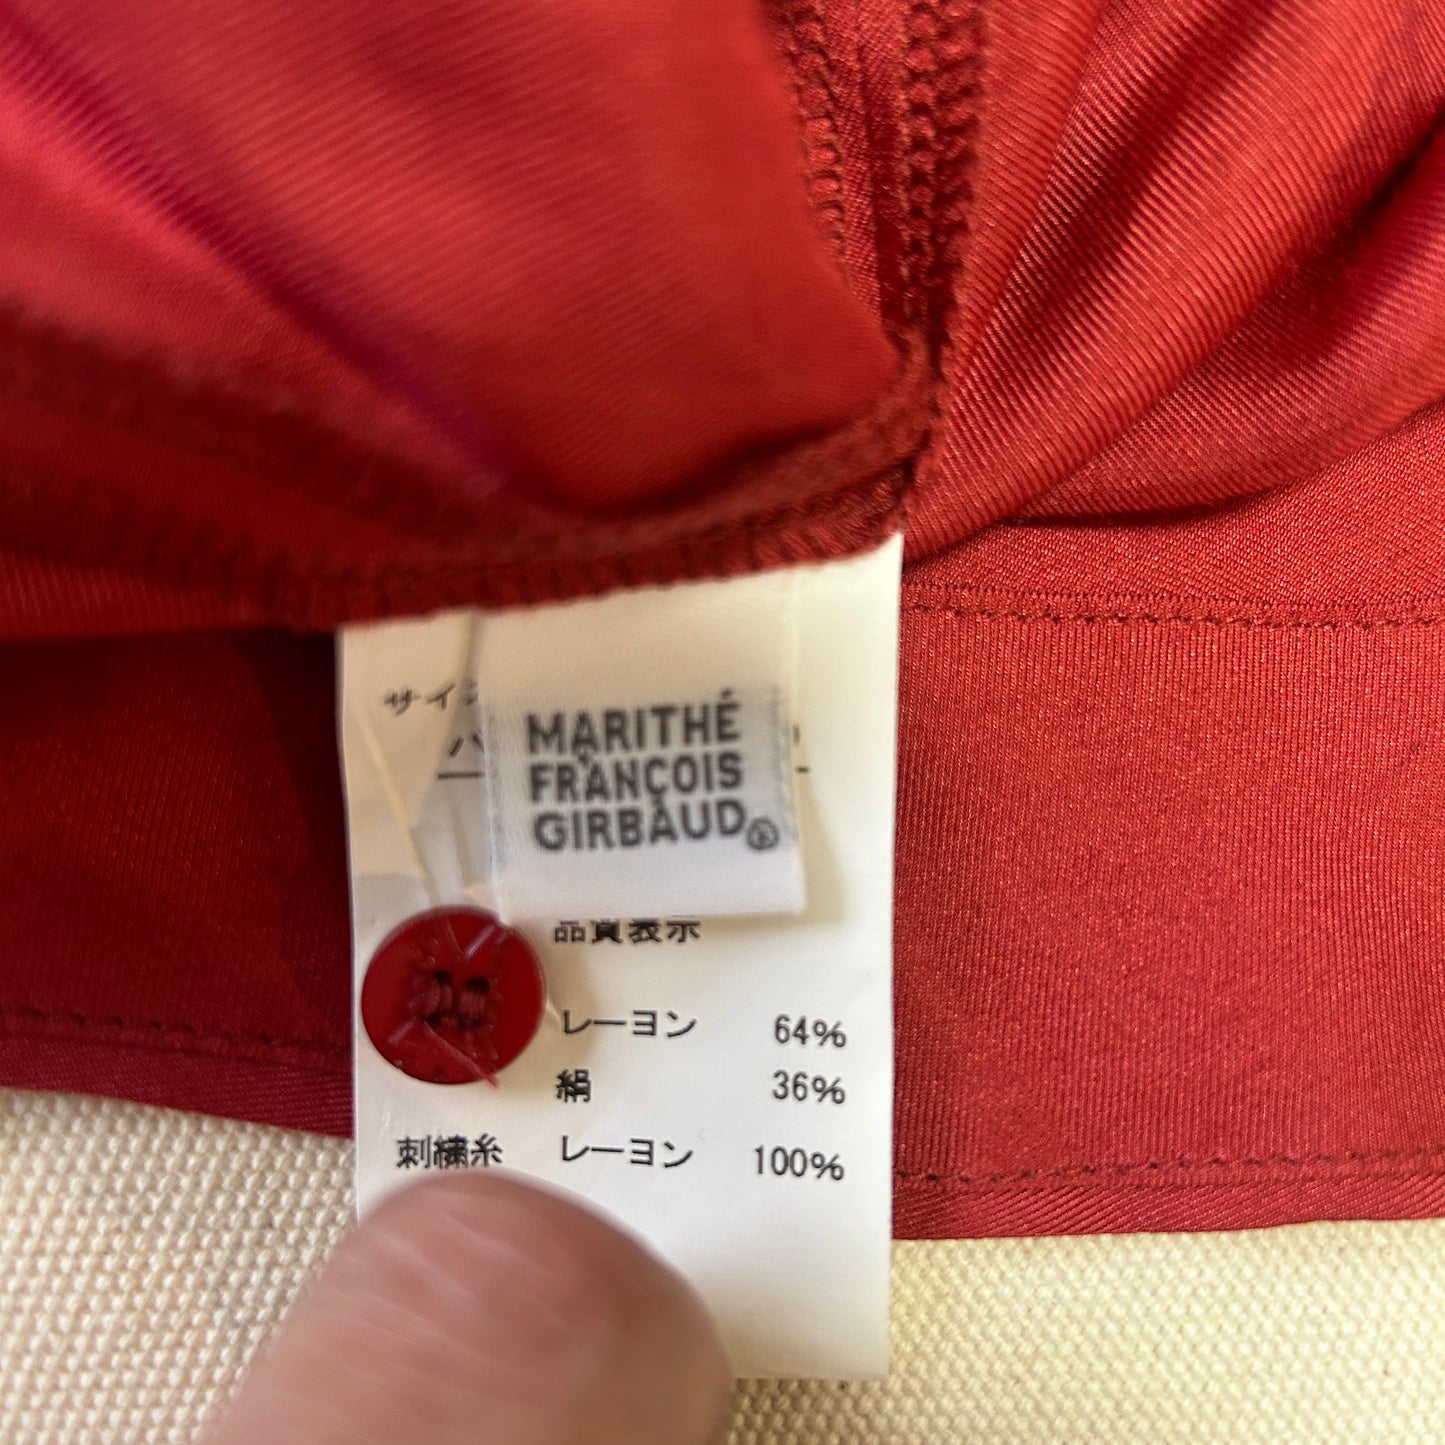 Marithé + François Girbaud Stitch Design Shirt